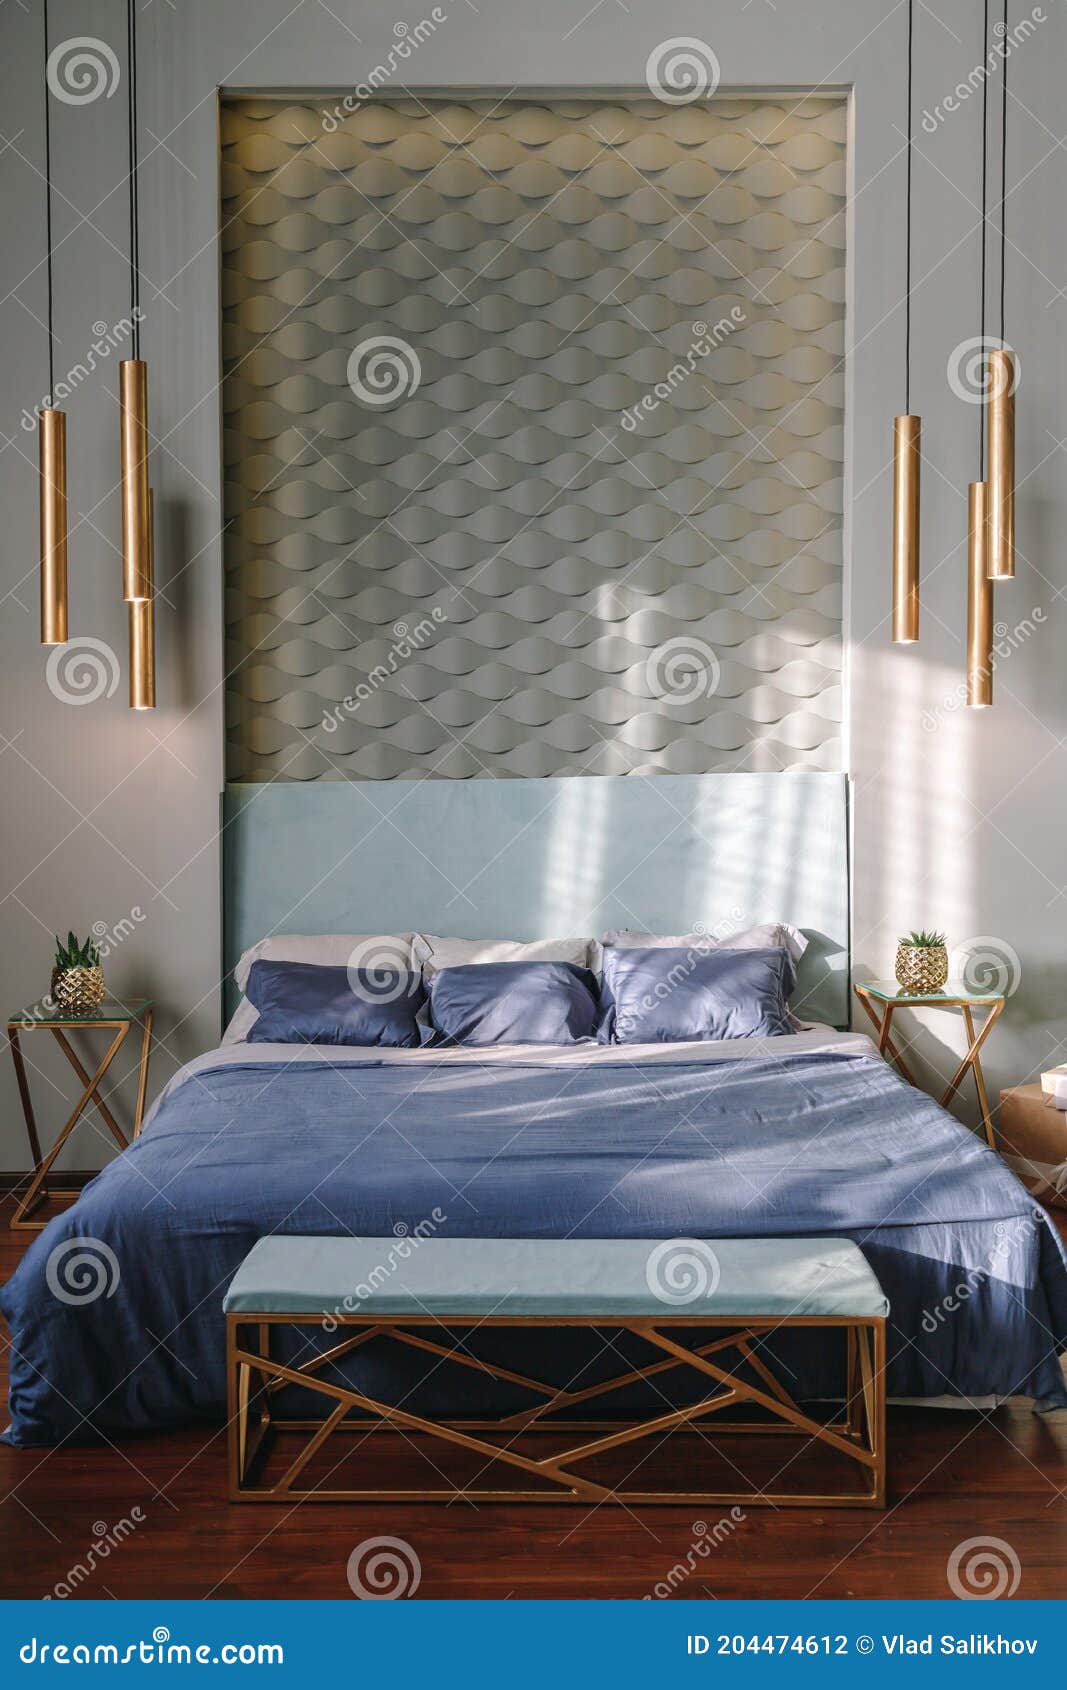 Wealthy Rich Room. Glamorous, Elegant Baroque Dream Bedroom Design ...